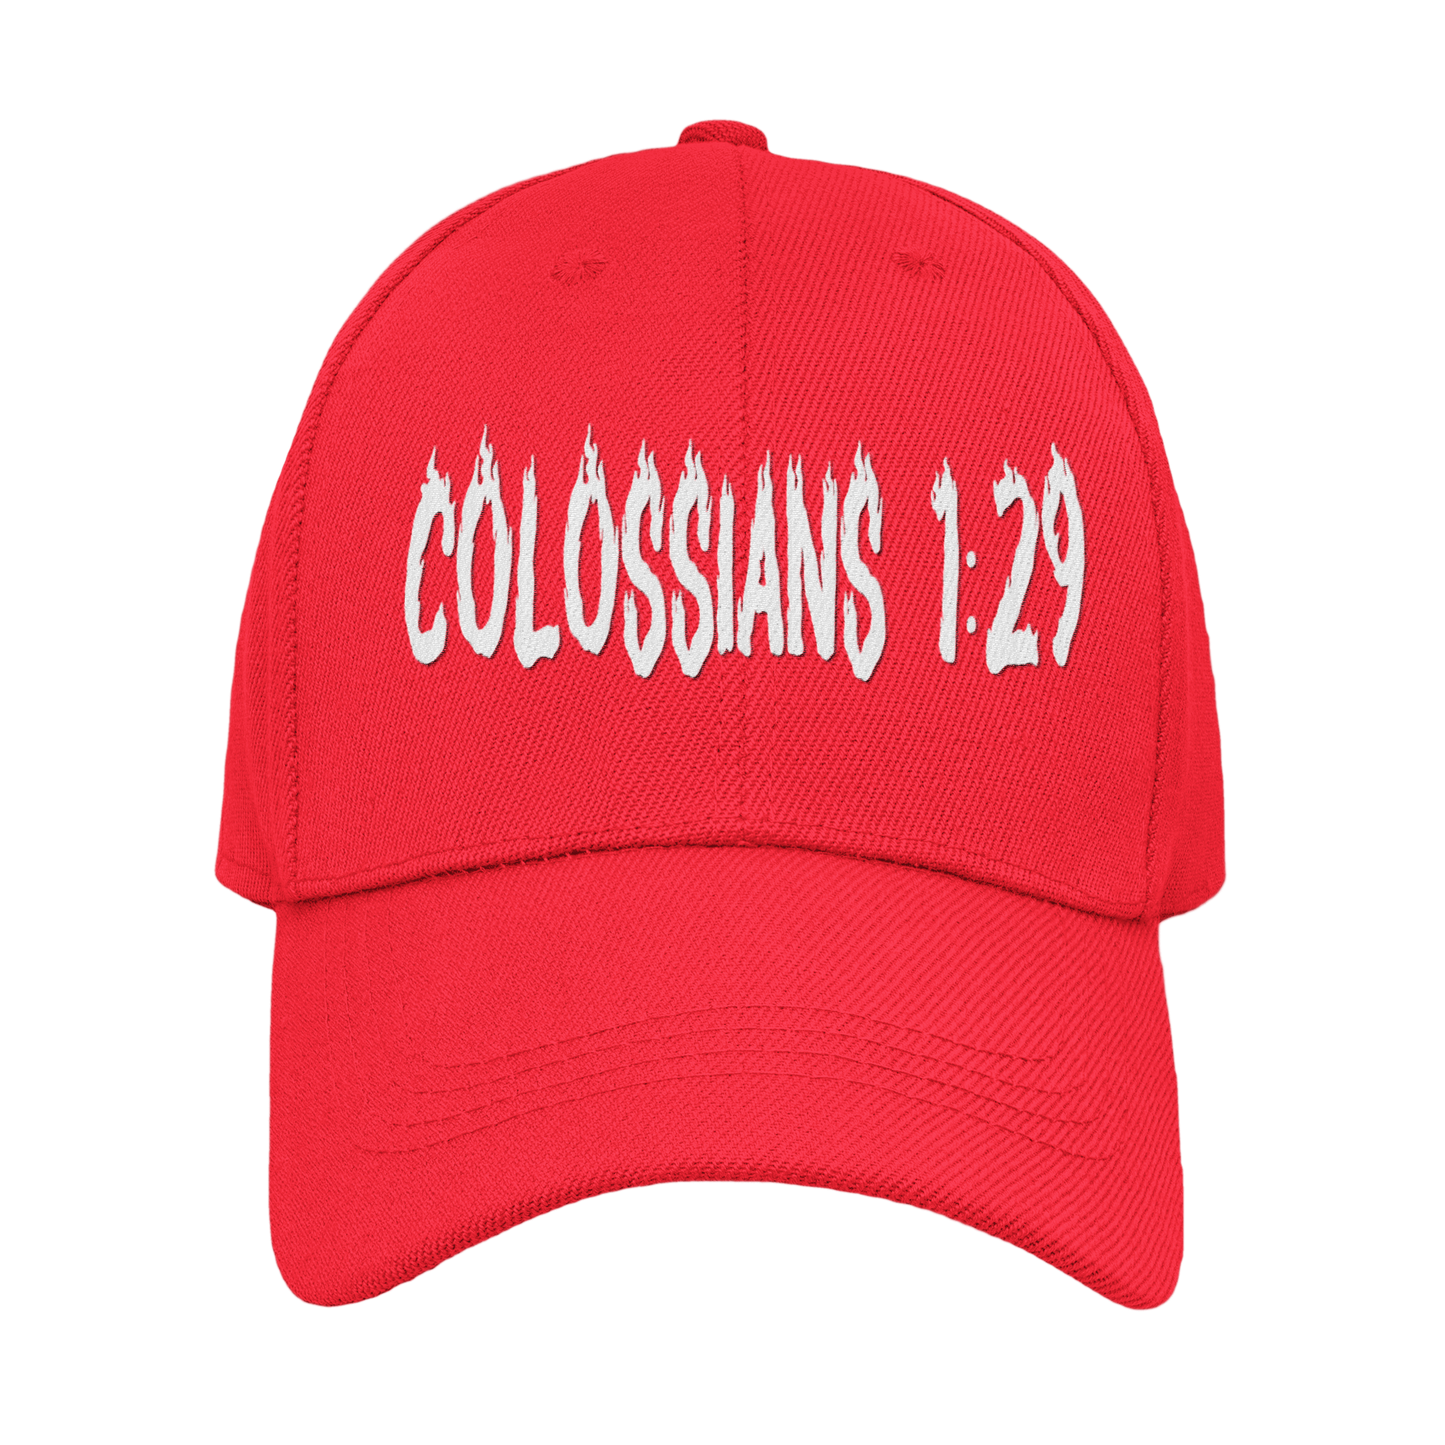 COLOSSIANS - Hat